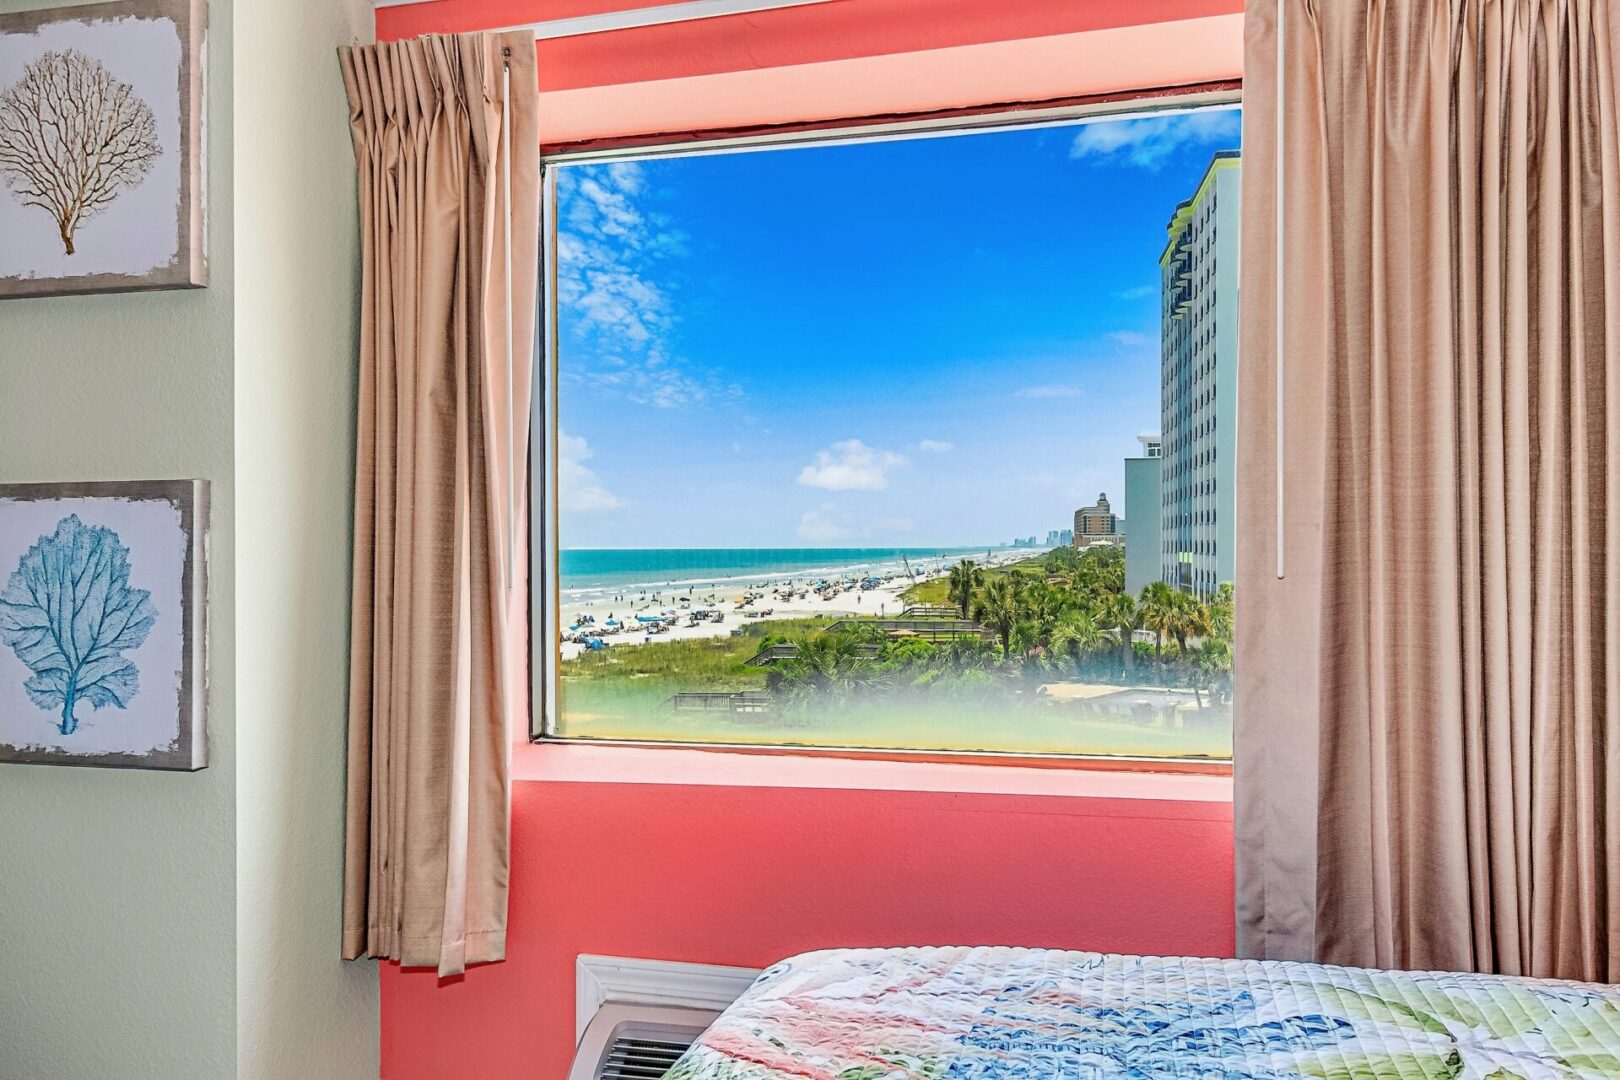 A window overlooking the beach